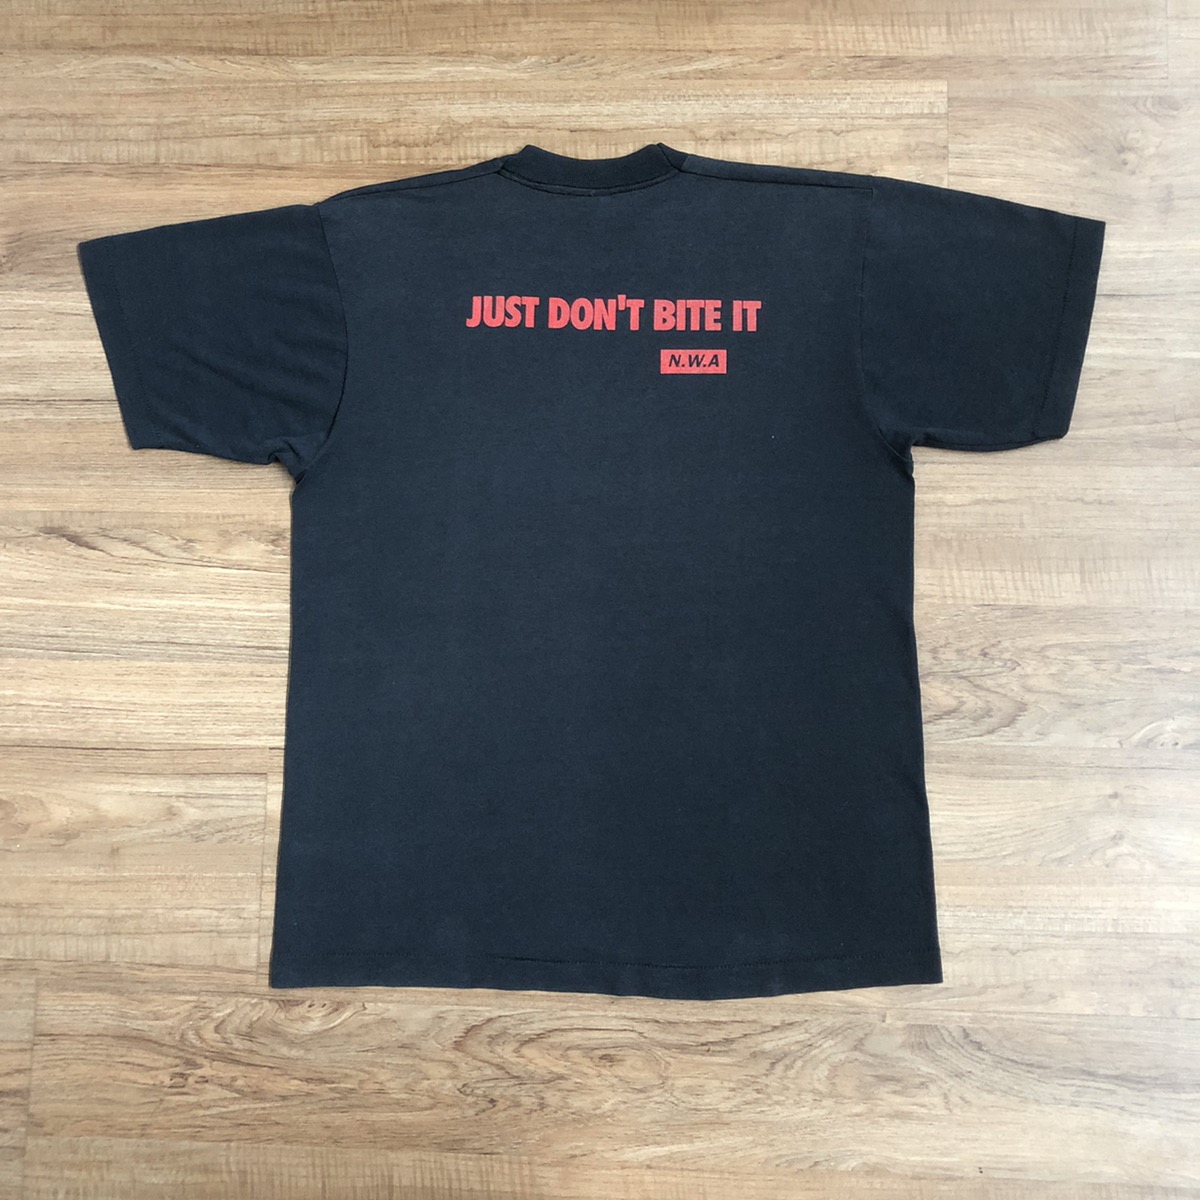 Vintage - 90s Nwa Shirt “Just Don’t Bite It” N.w.a Gangsta Rap Hip HO